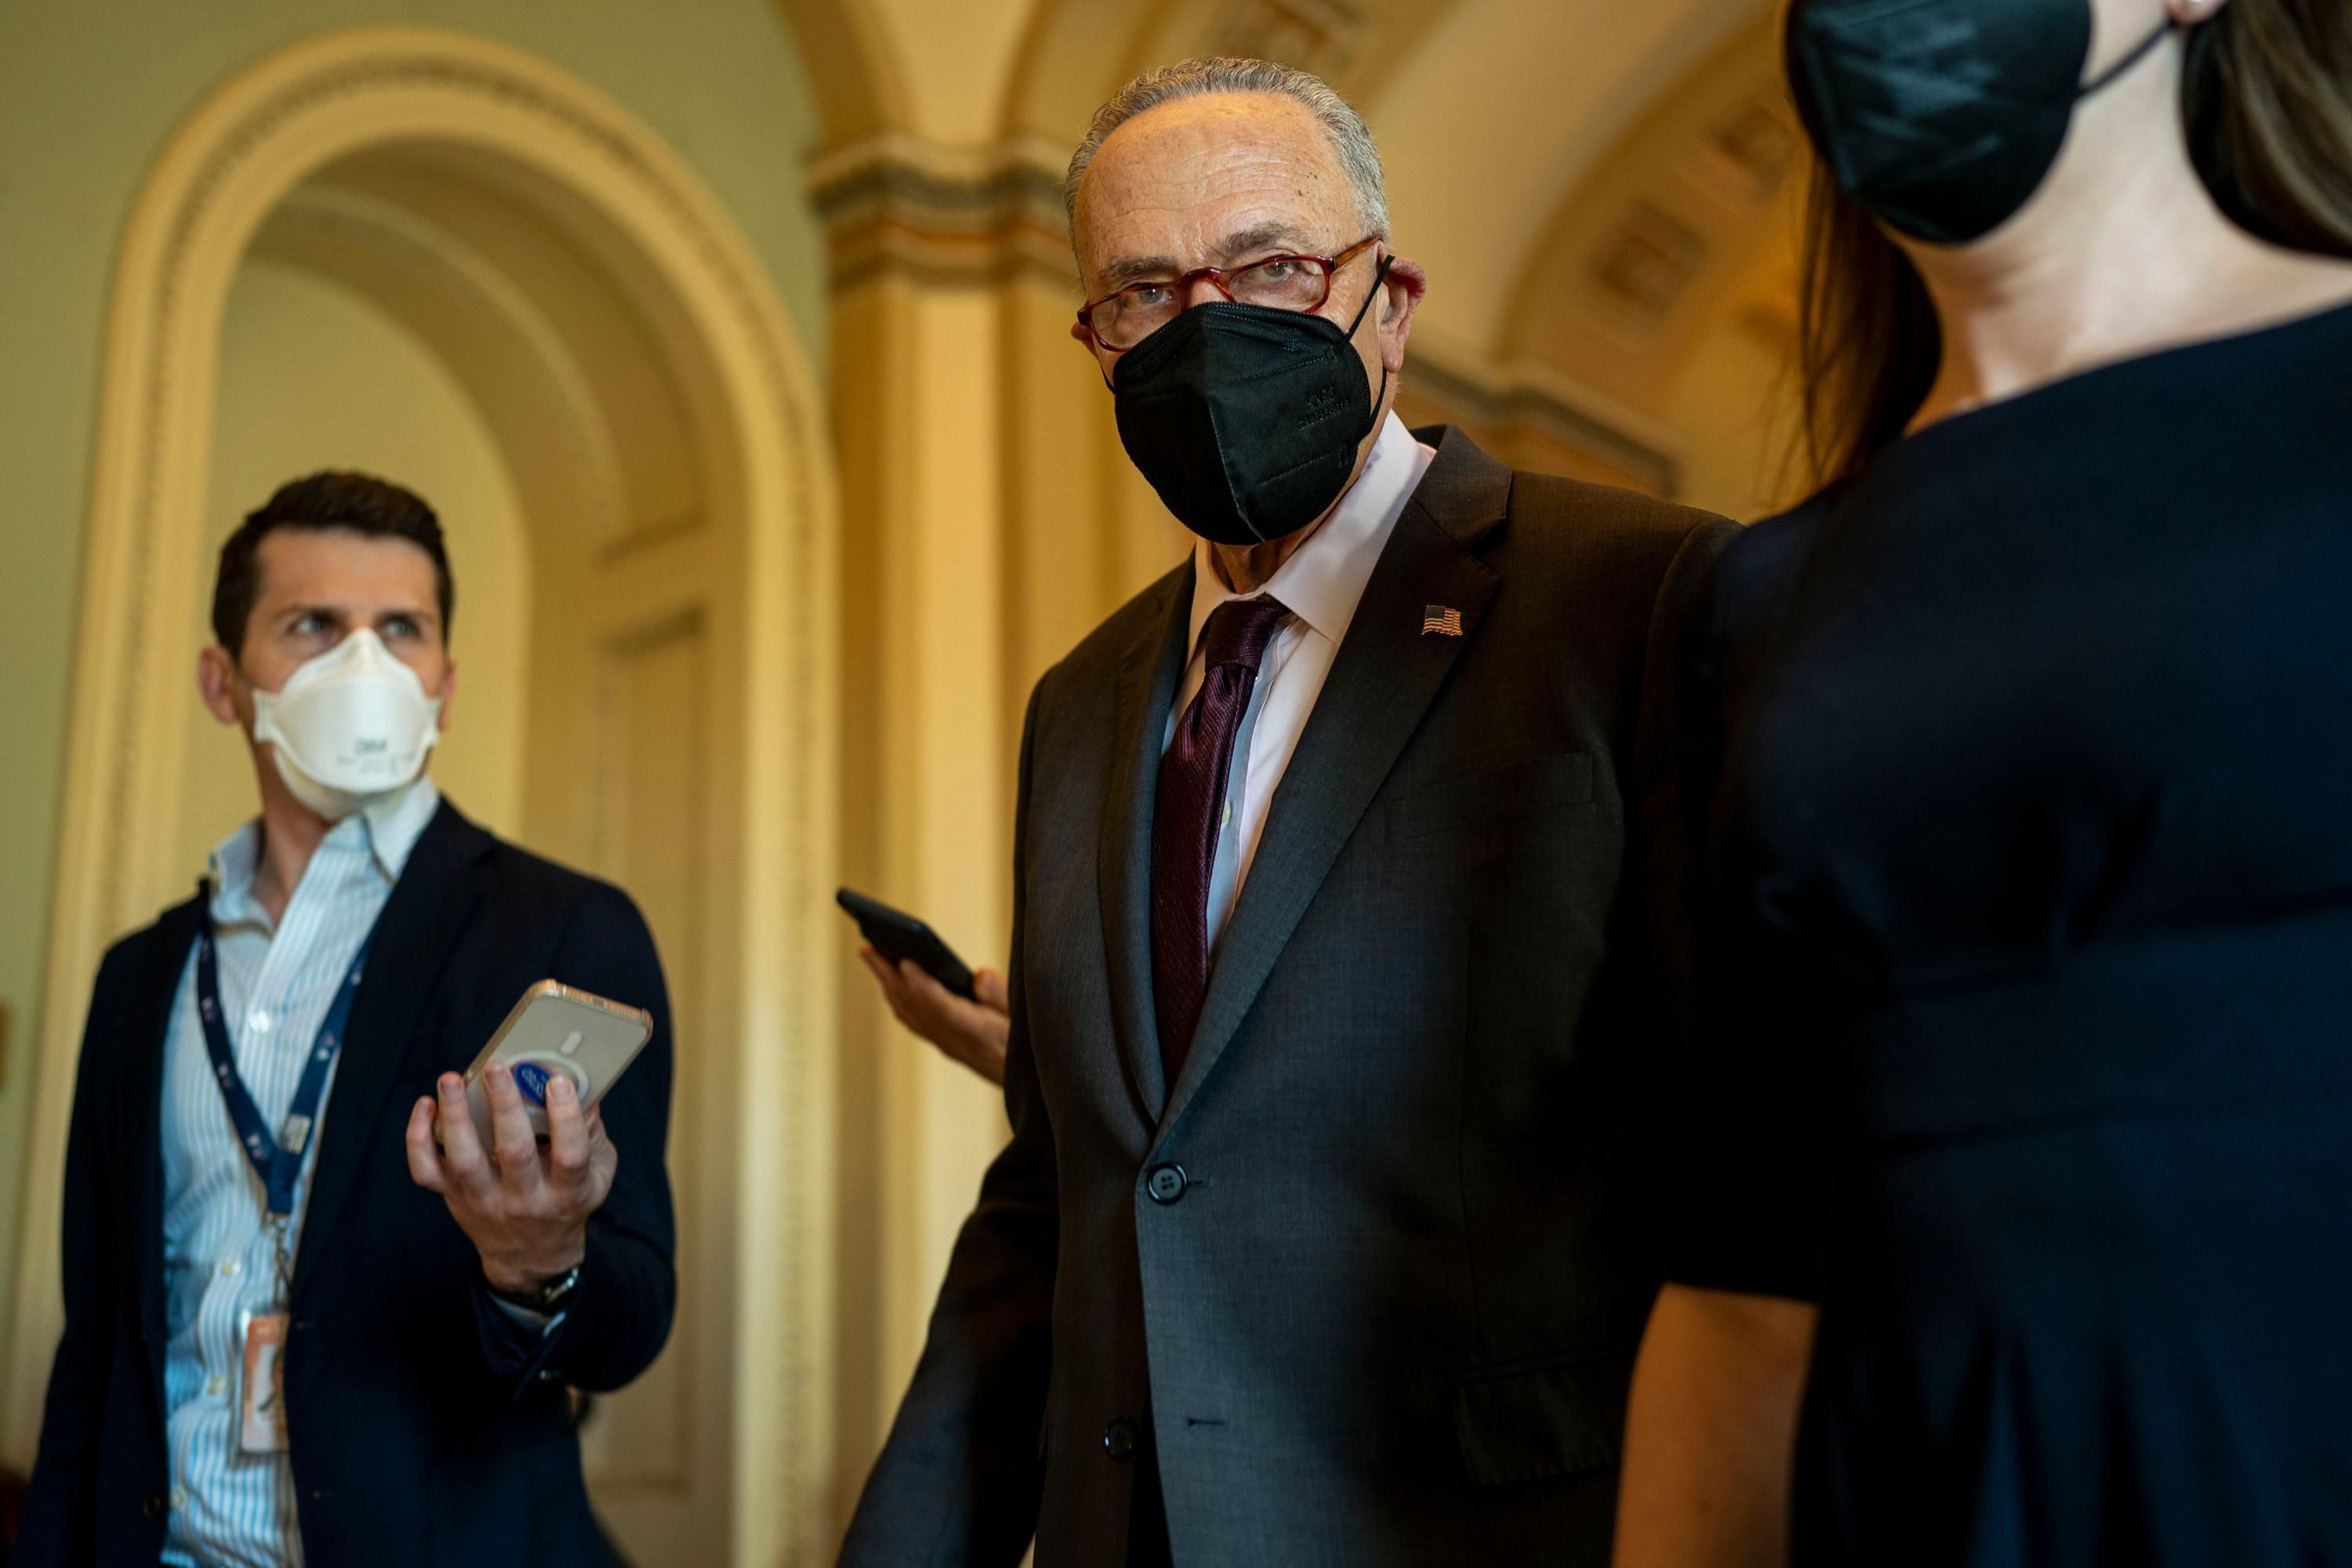 Senate Majority Leader Chuck Schumer walks in the U.S. Capitol Building